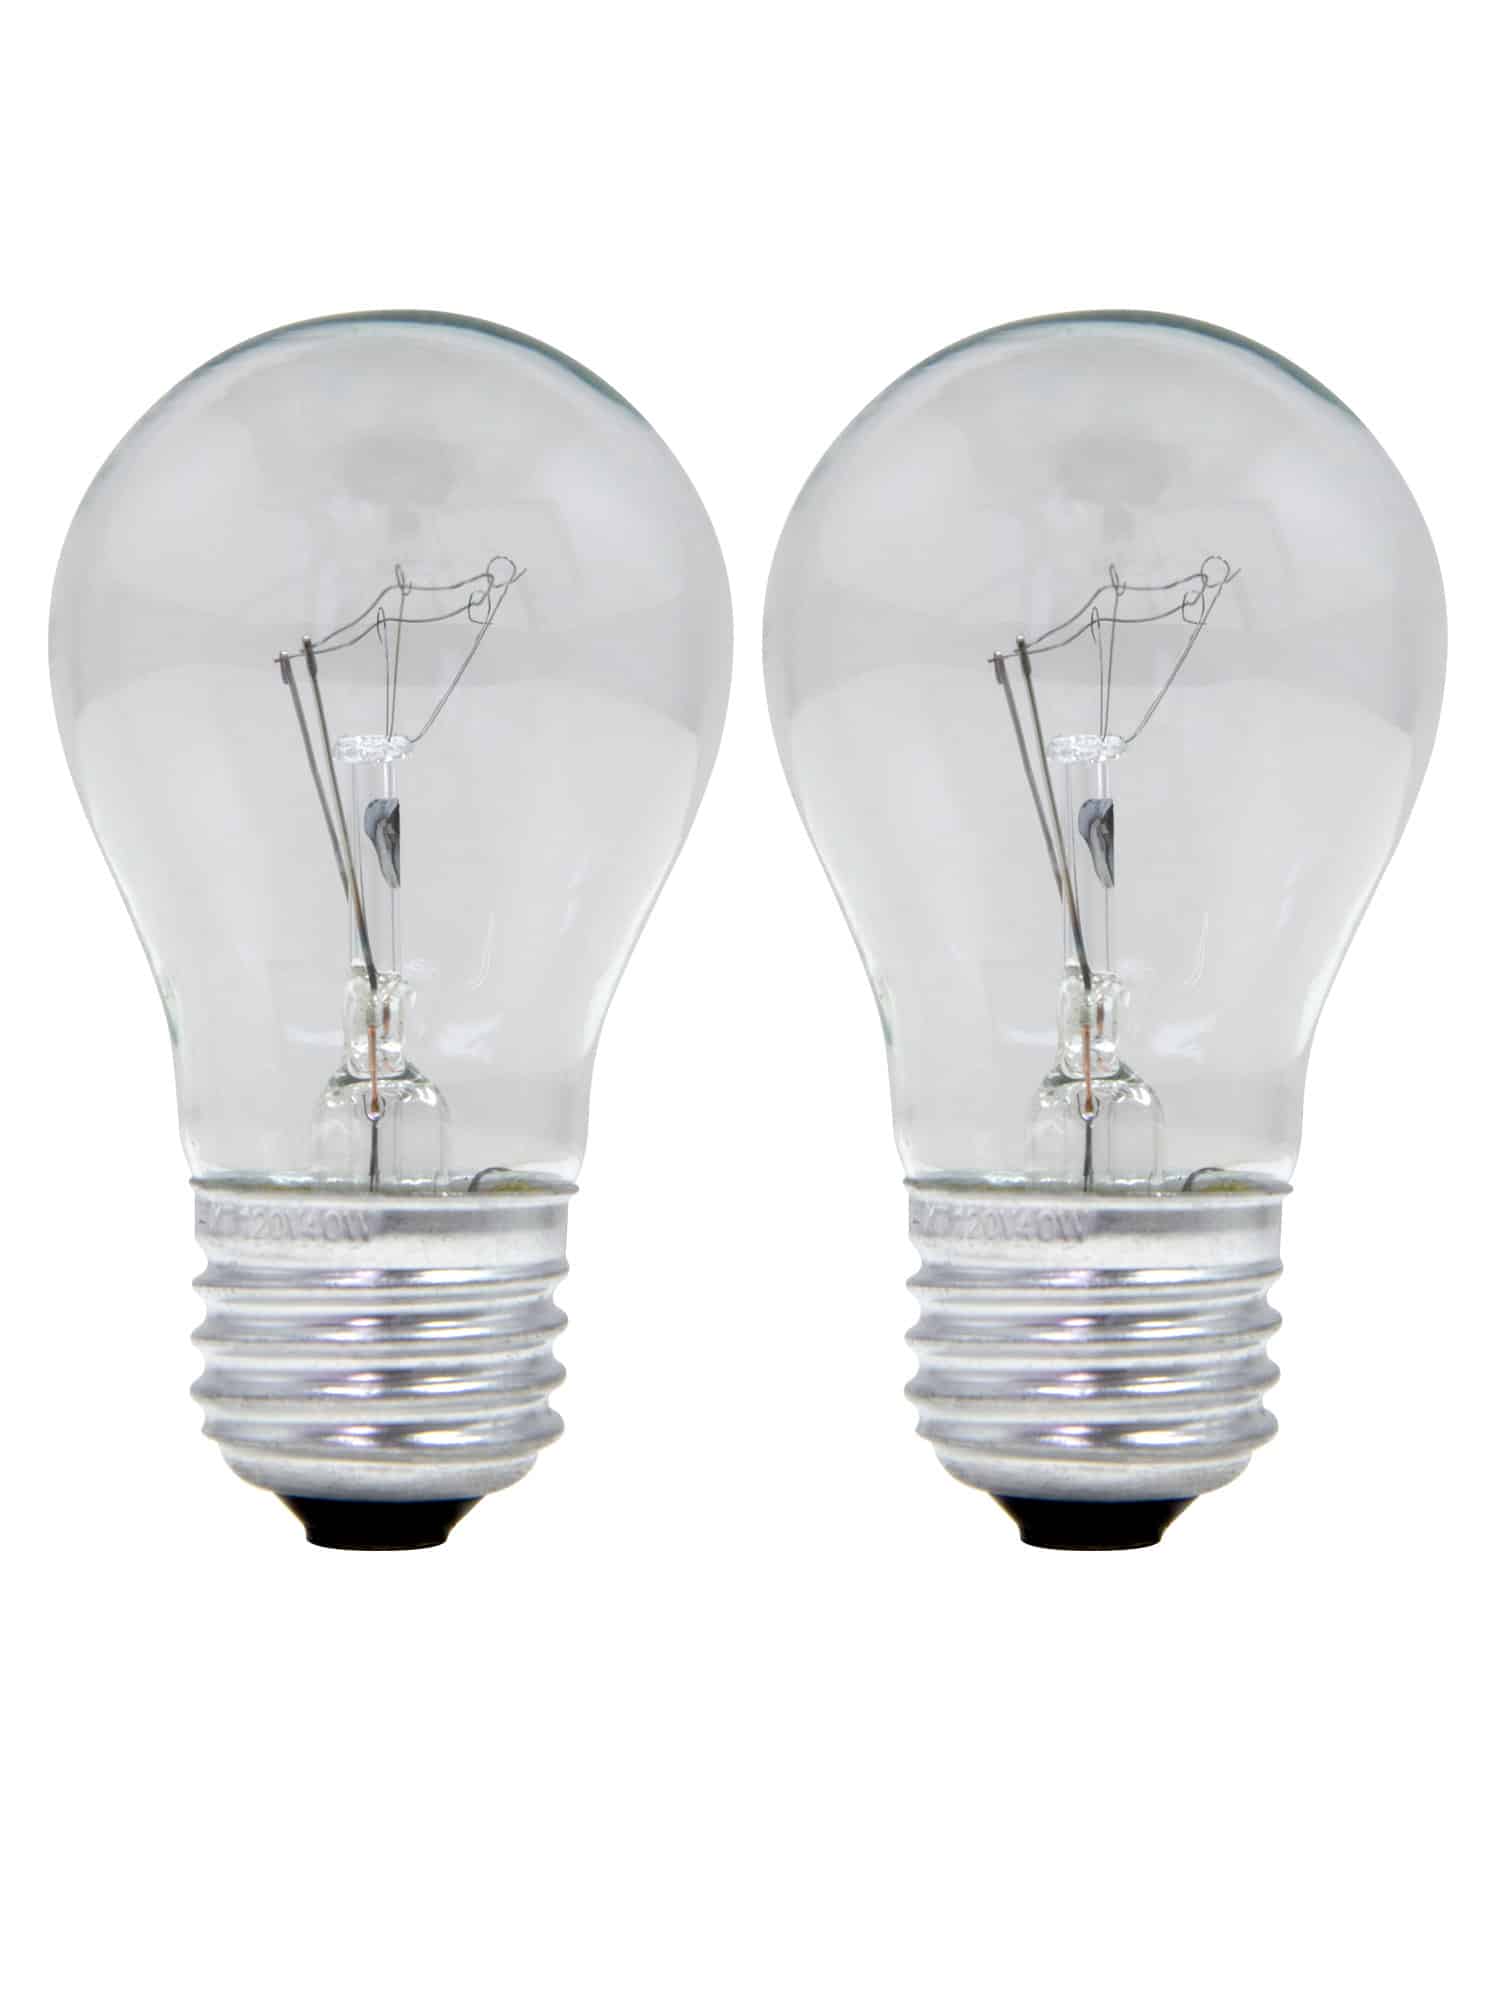 Lava Lamp 15-Watt Replacement Bulb 2-Pack